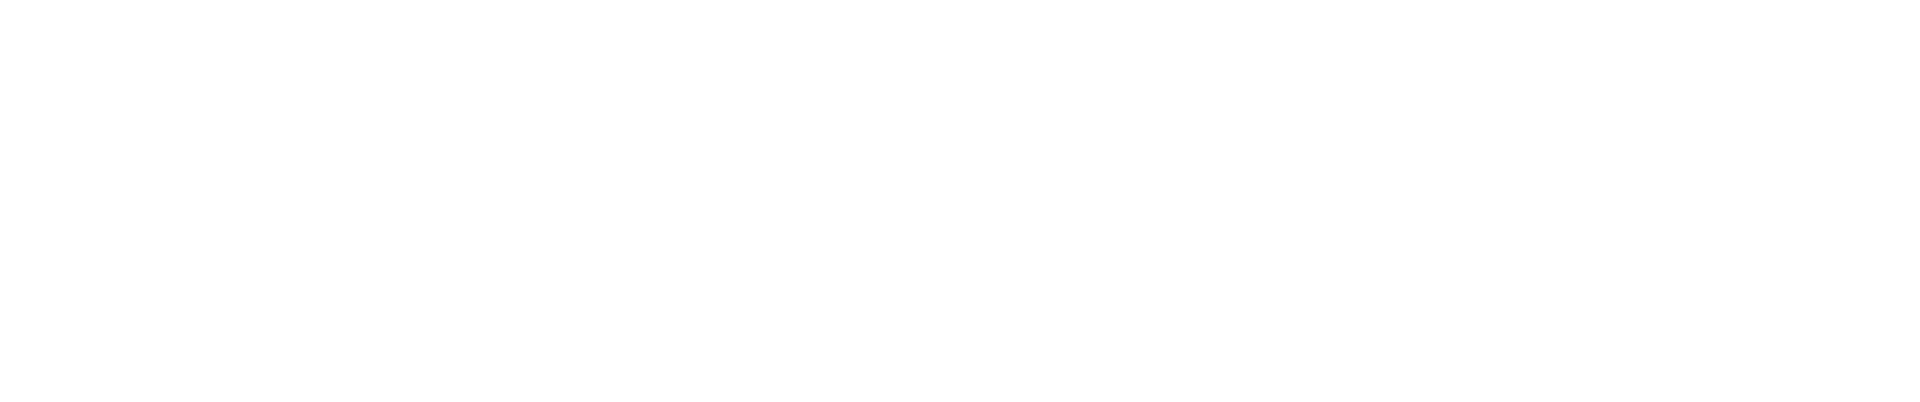 Hollyland Logo WHITE